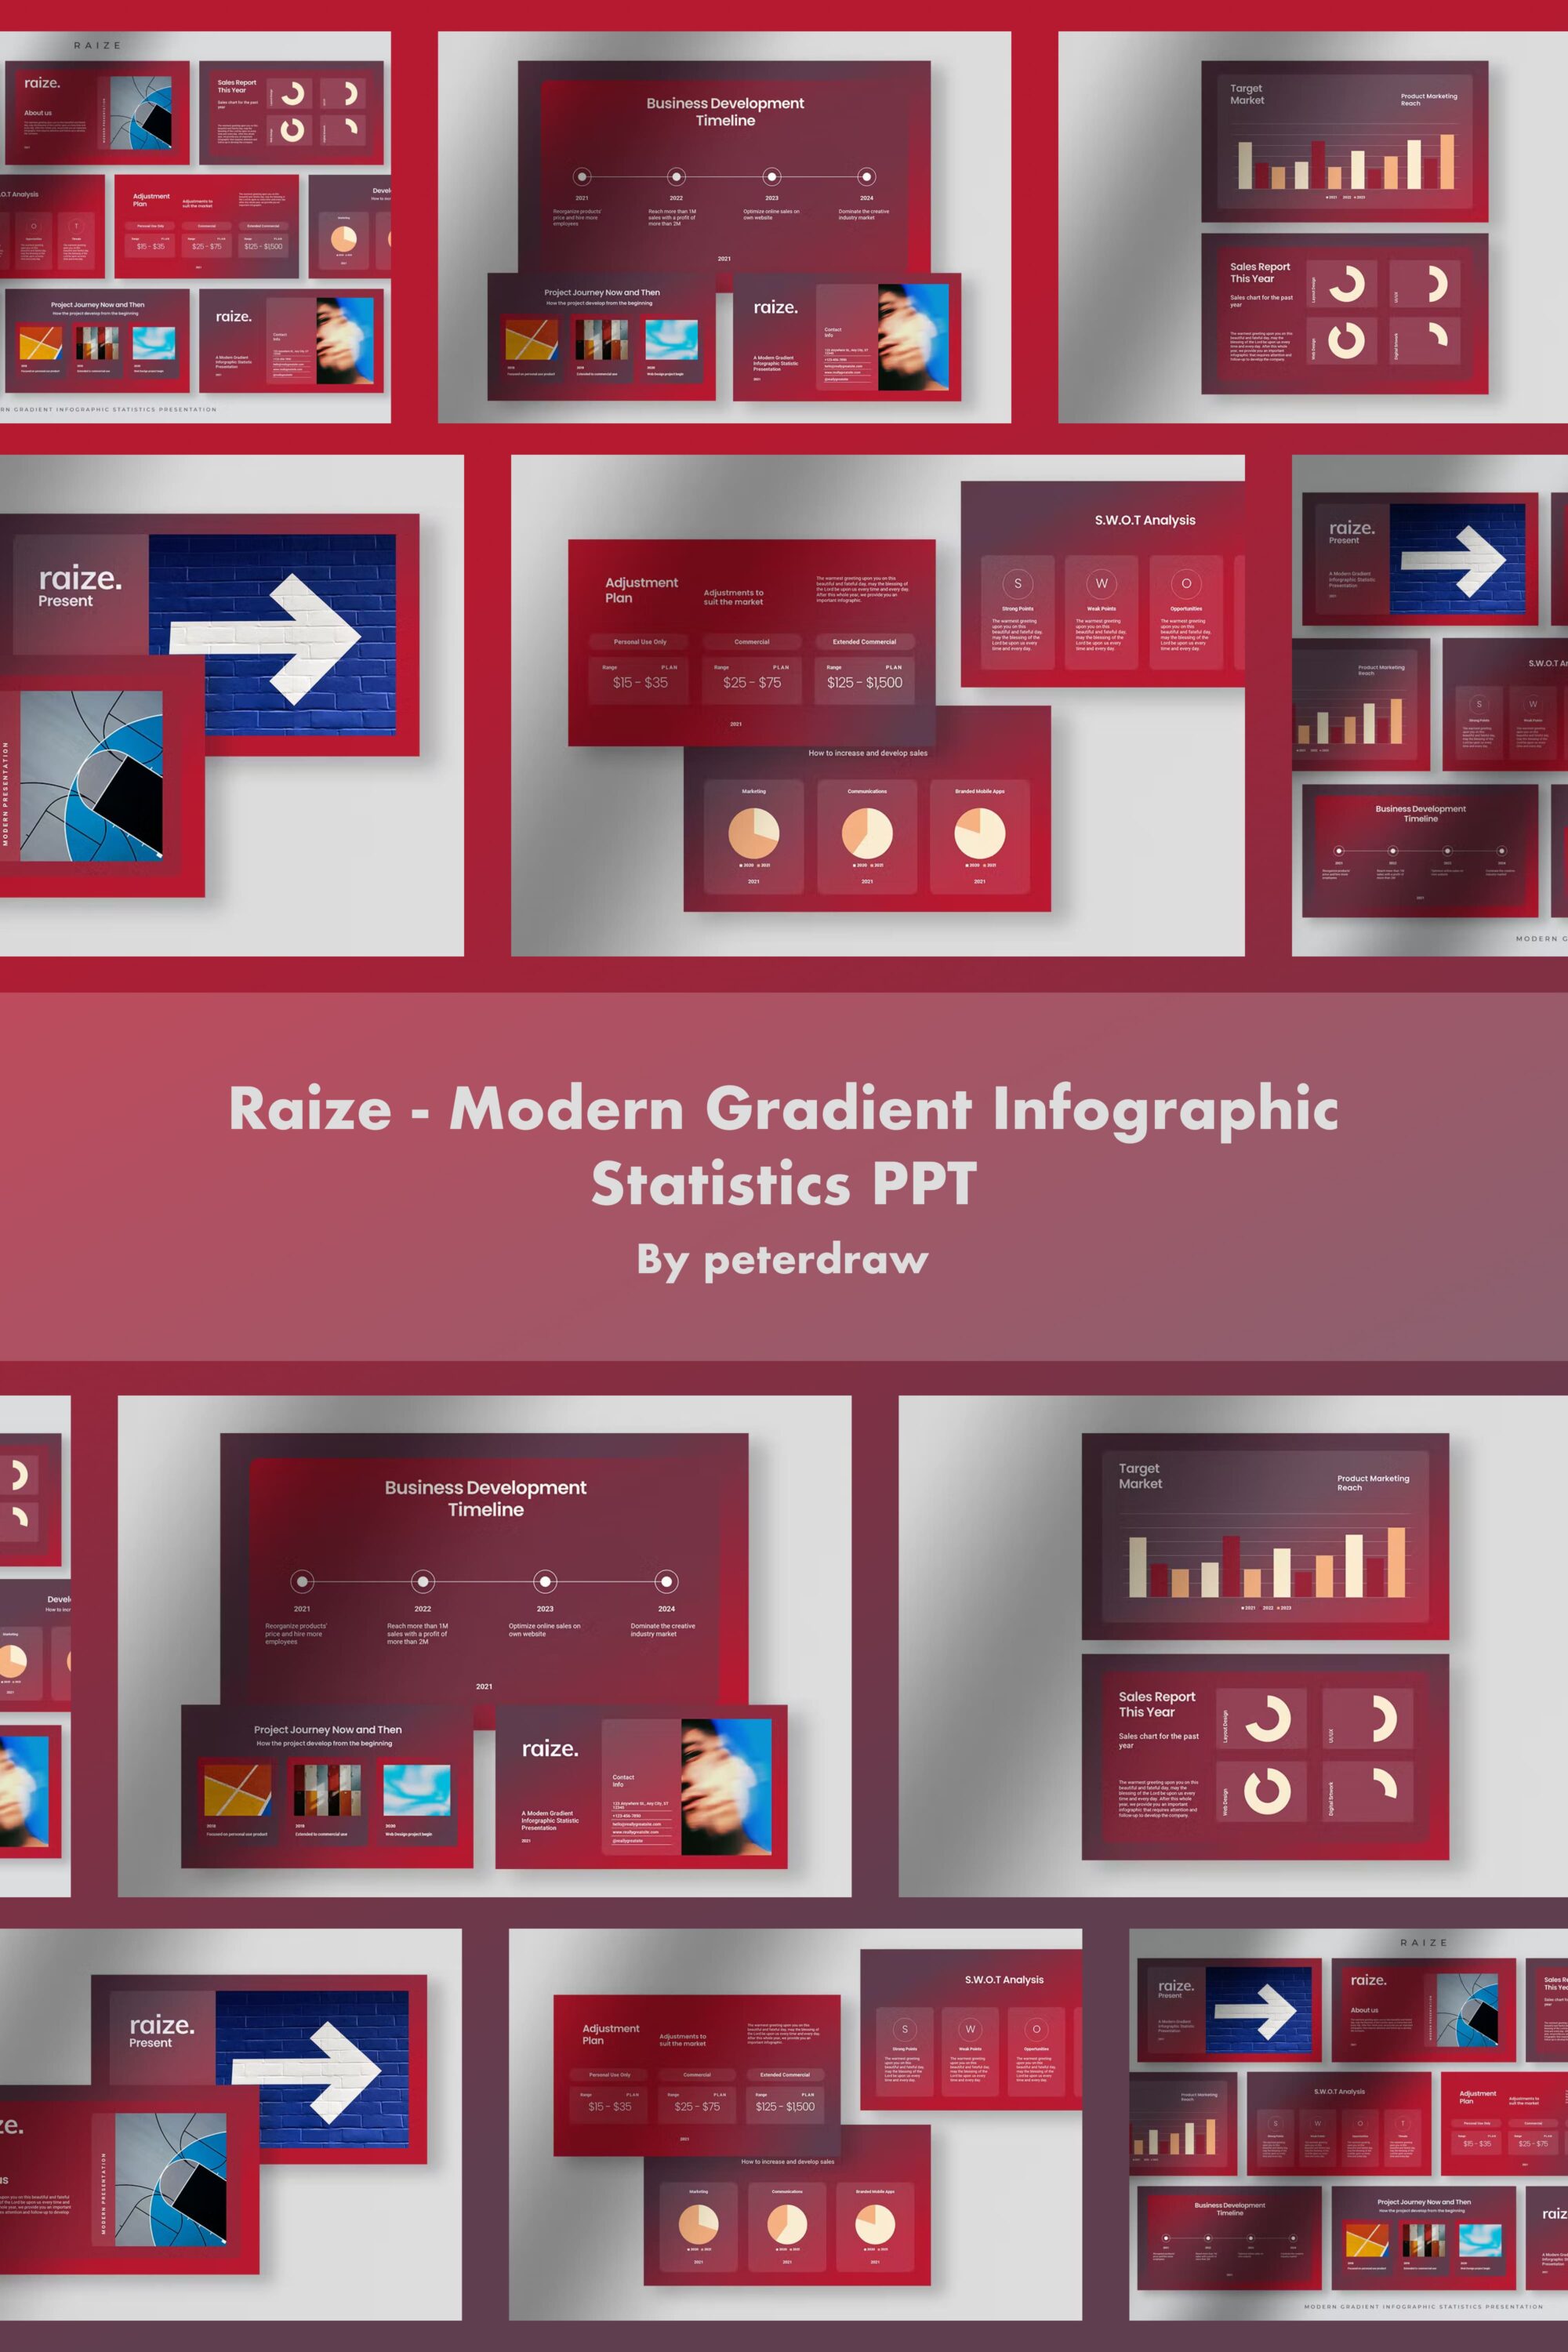 raize modern gradient infographic statistics ppt 03